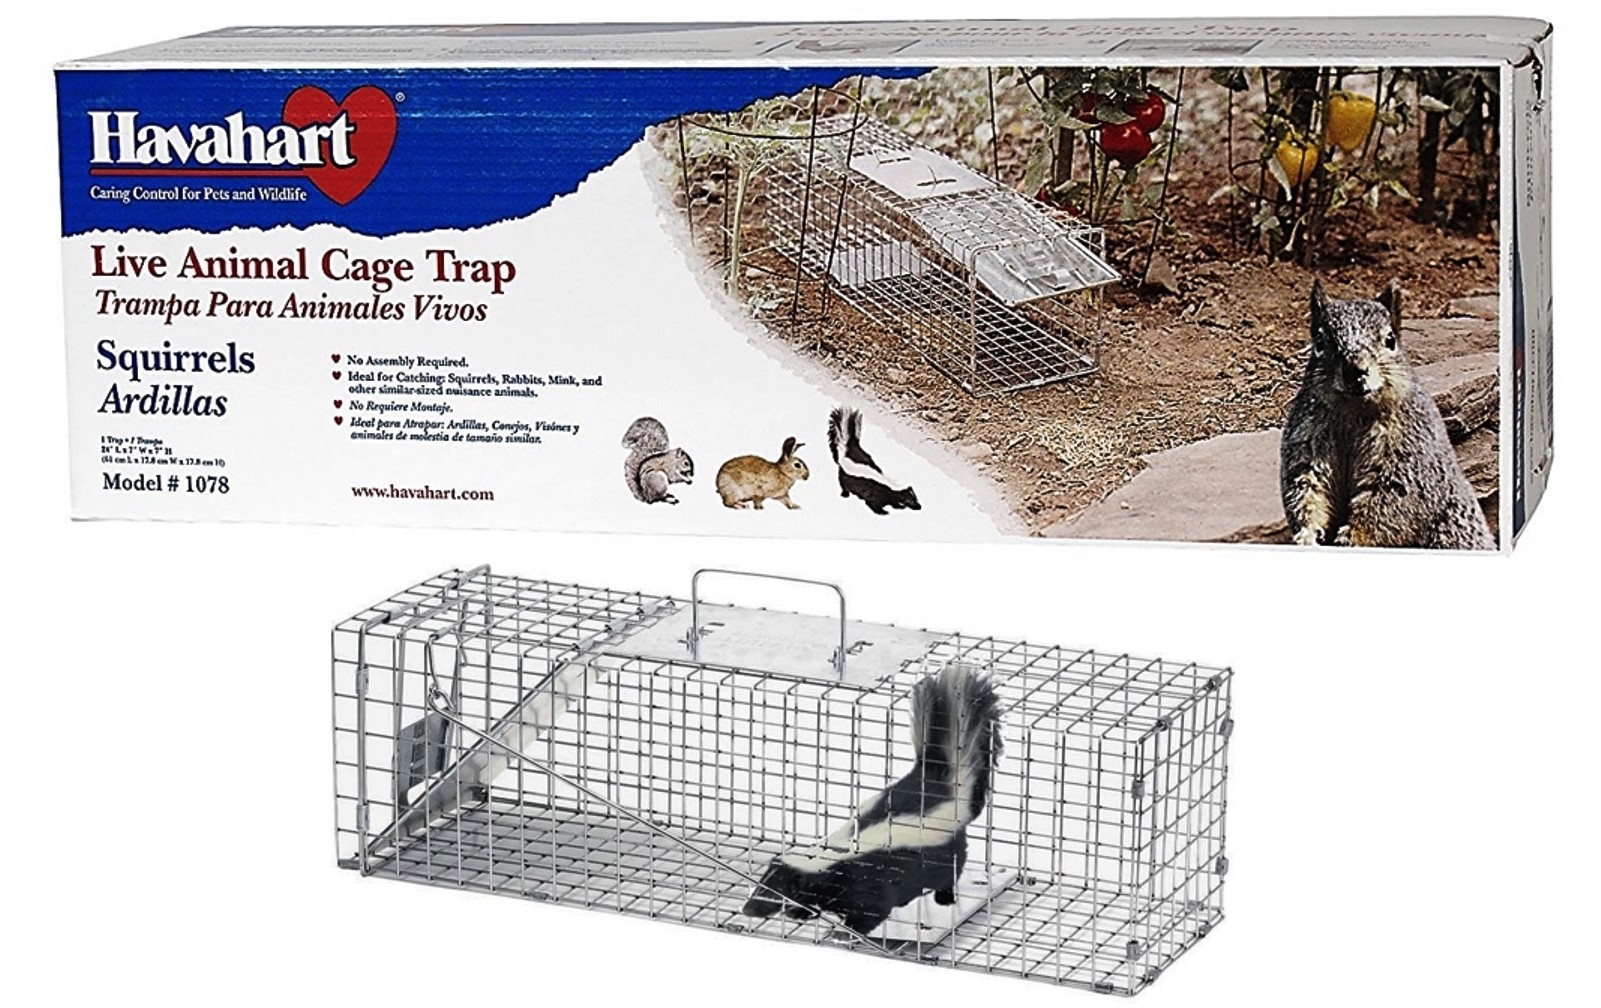 Live Animal Cage Traps or Havahart Traps